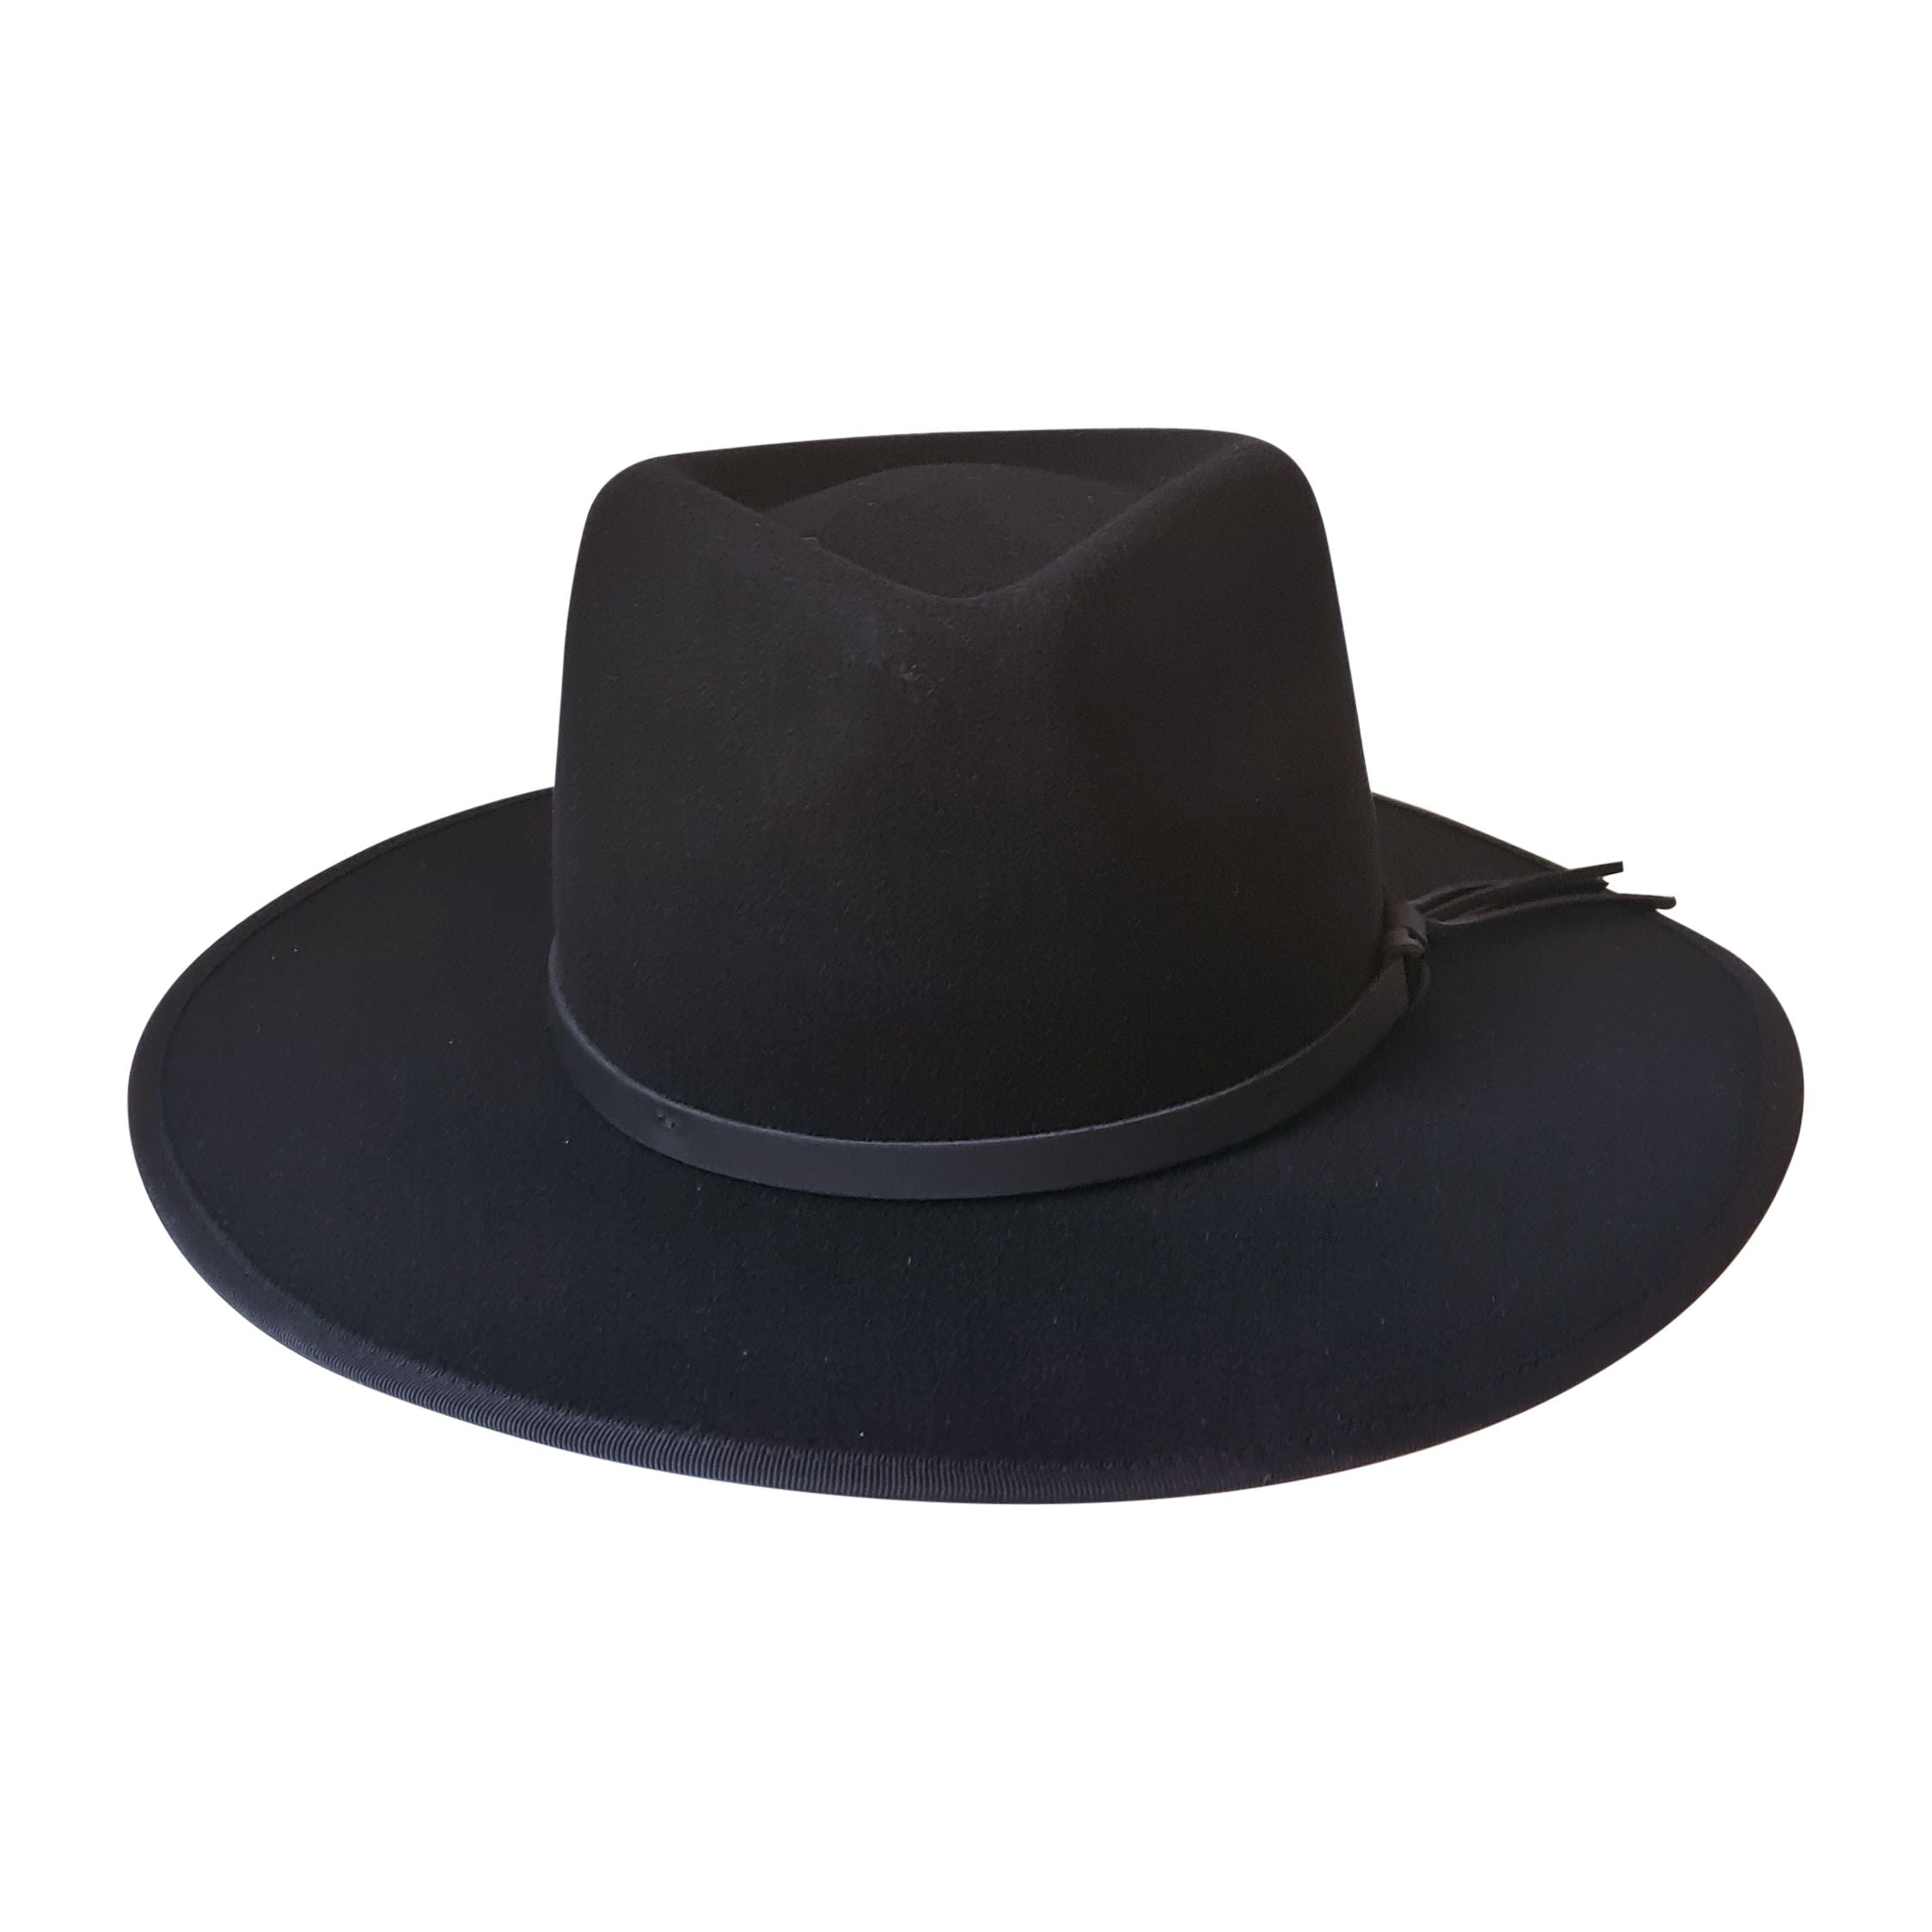 Atlanta - Wide Brim Fedora Hat - Black Large 58-61cm / Black